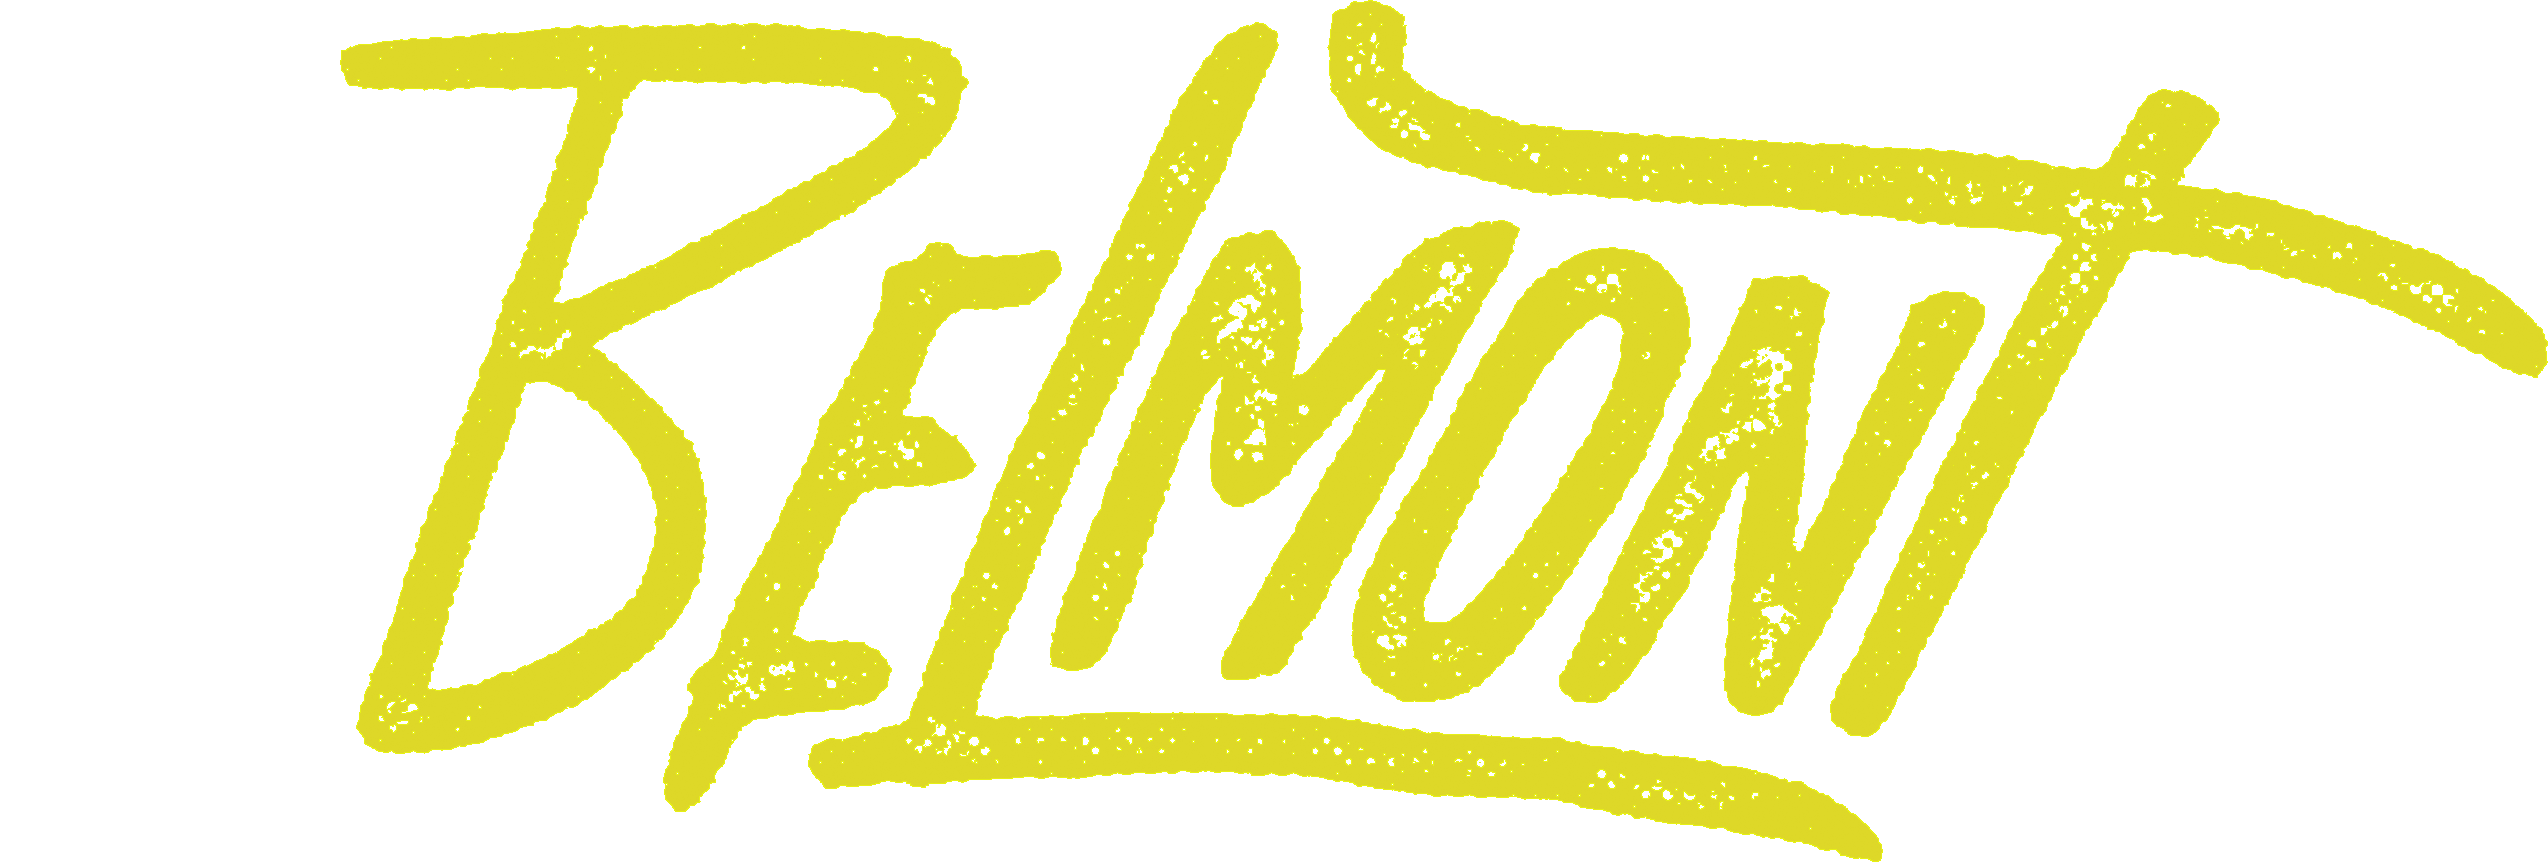 Belmont Logo - Belmont